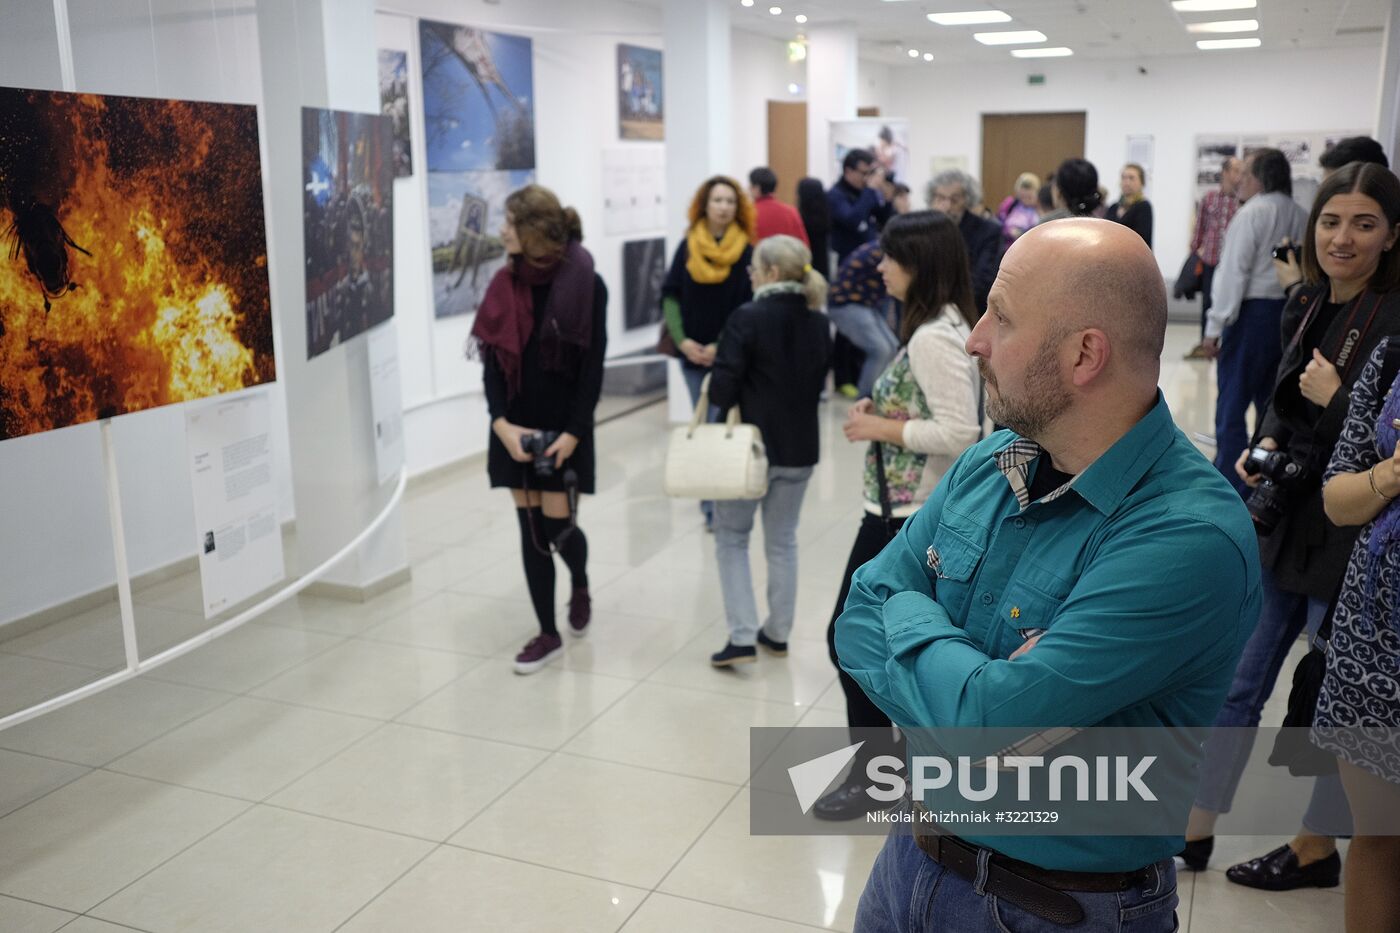 Opening of exhibition of Andrei Stenin Photo Contest winners in Krasnodar